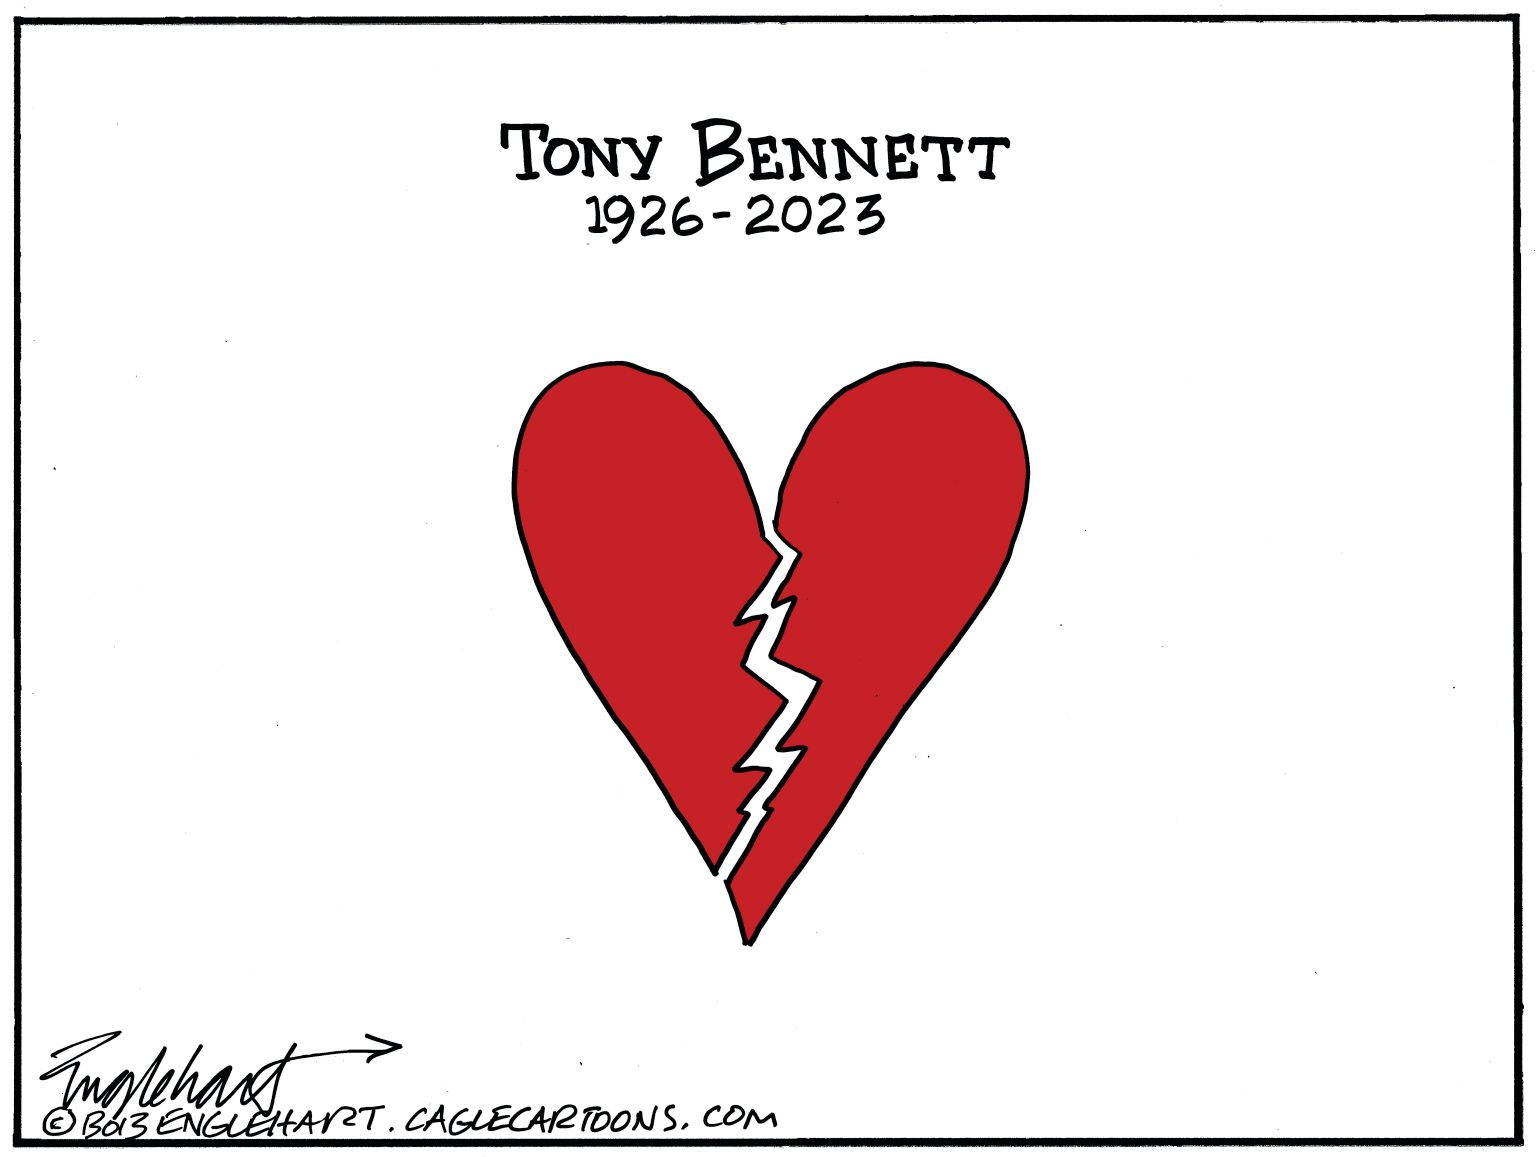 Tony Bennett - newsjustin.press - editorial cartoons